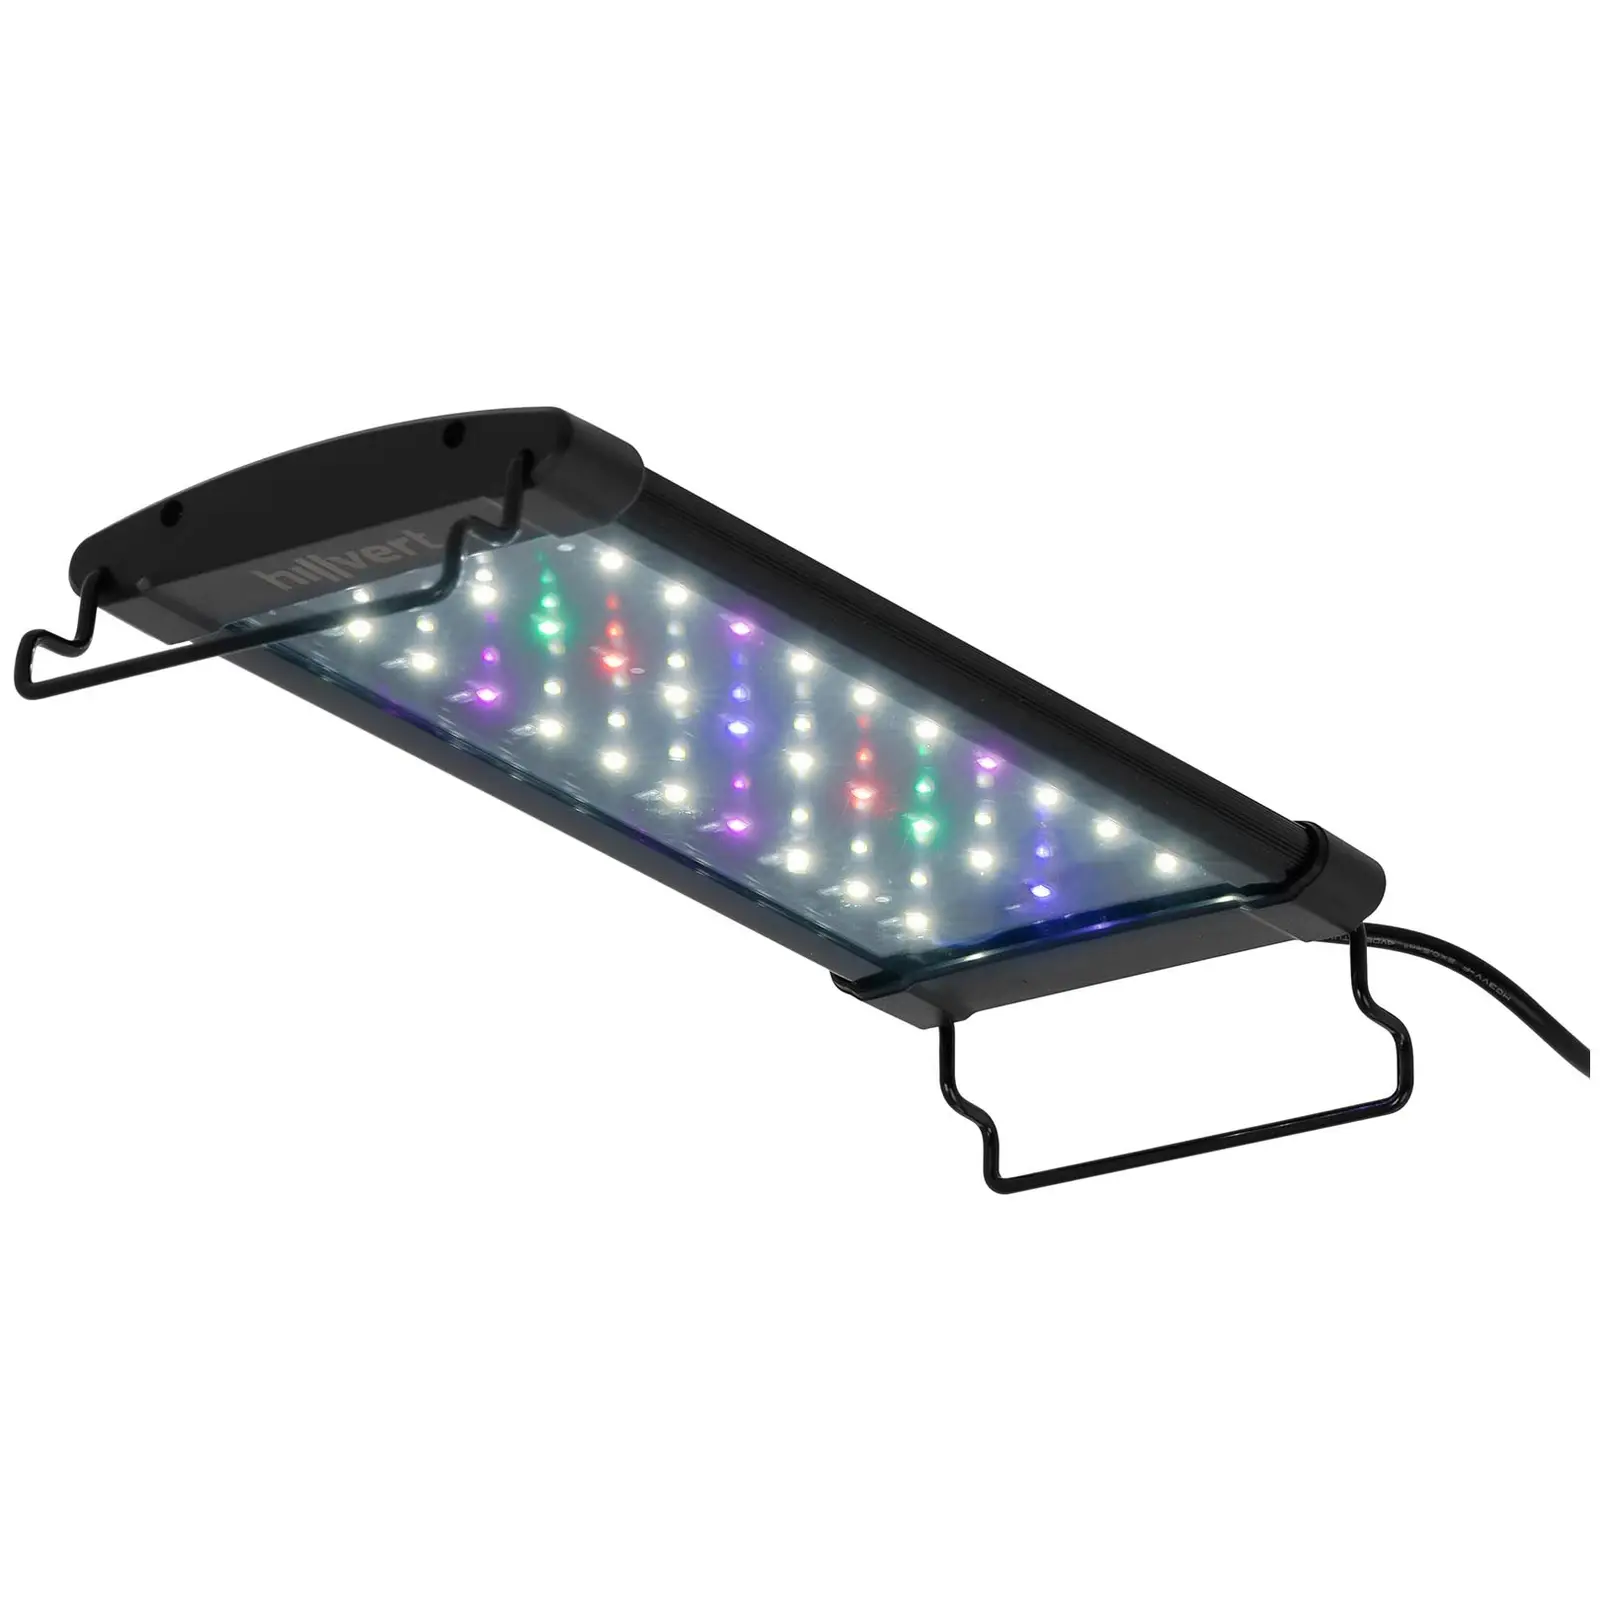 Lampa LED do akwarium  - 33 diody LED - 6 W - 27 cm